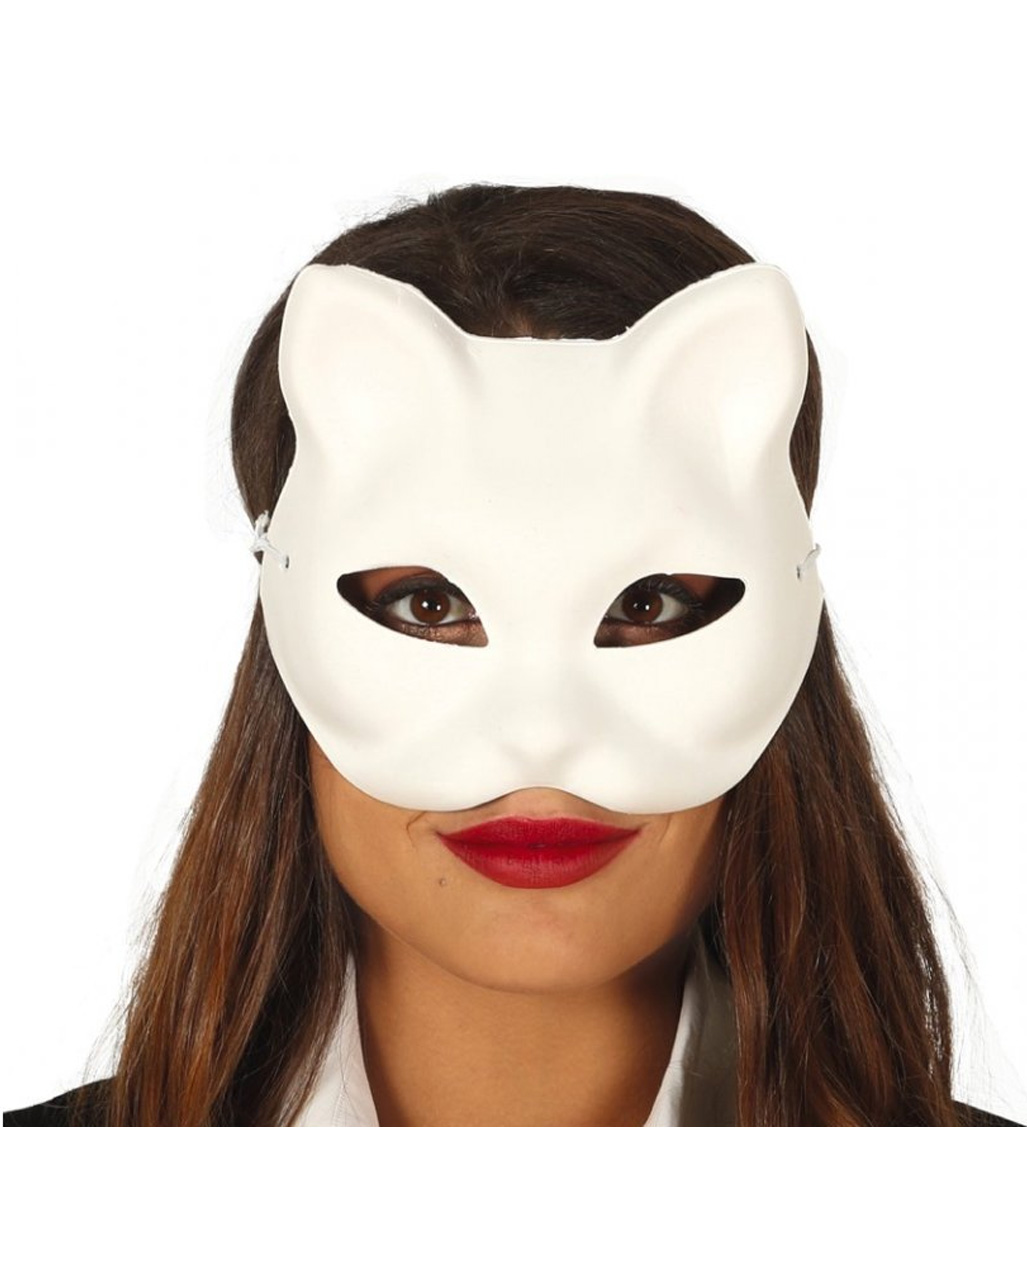 House Cat Mask Latex Full Head Pussycat Cats Animal Masks Fancy Dress Costume